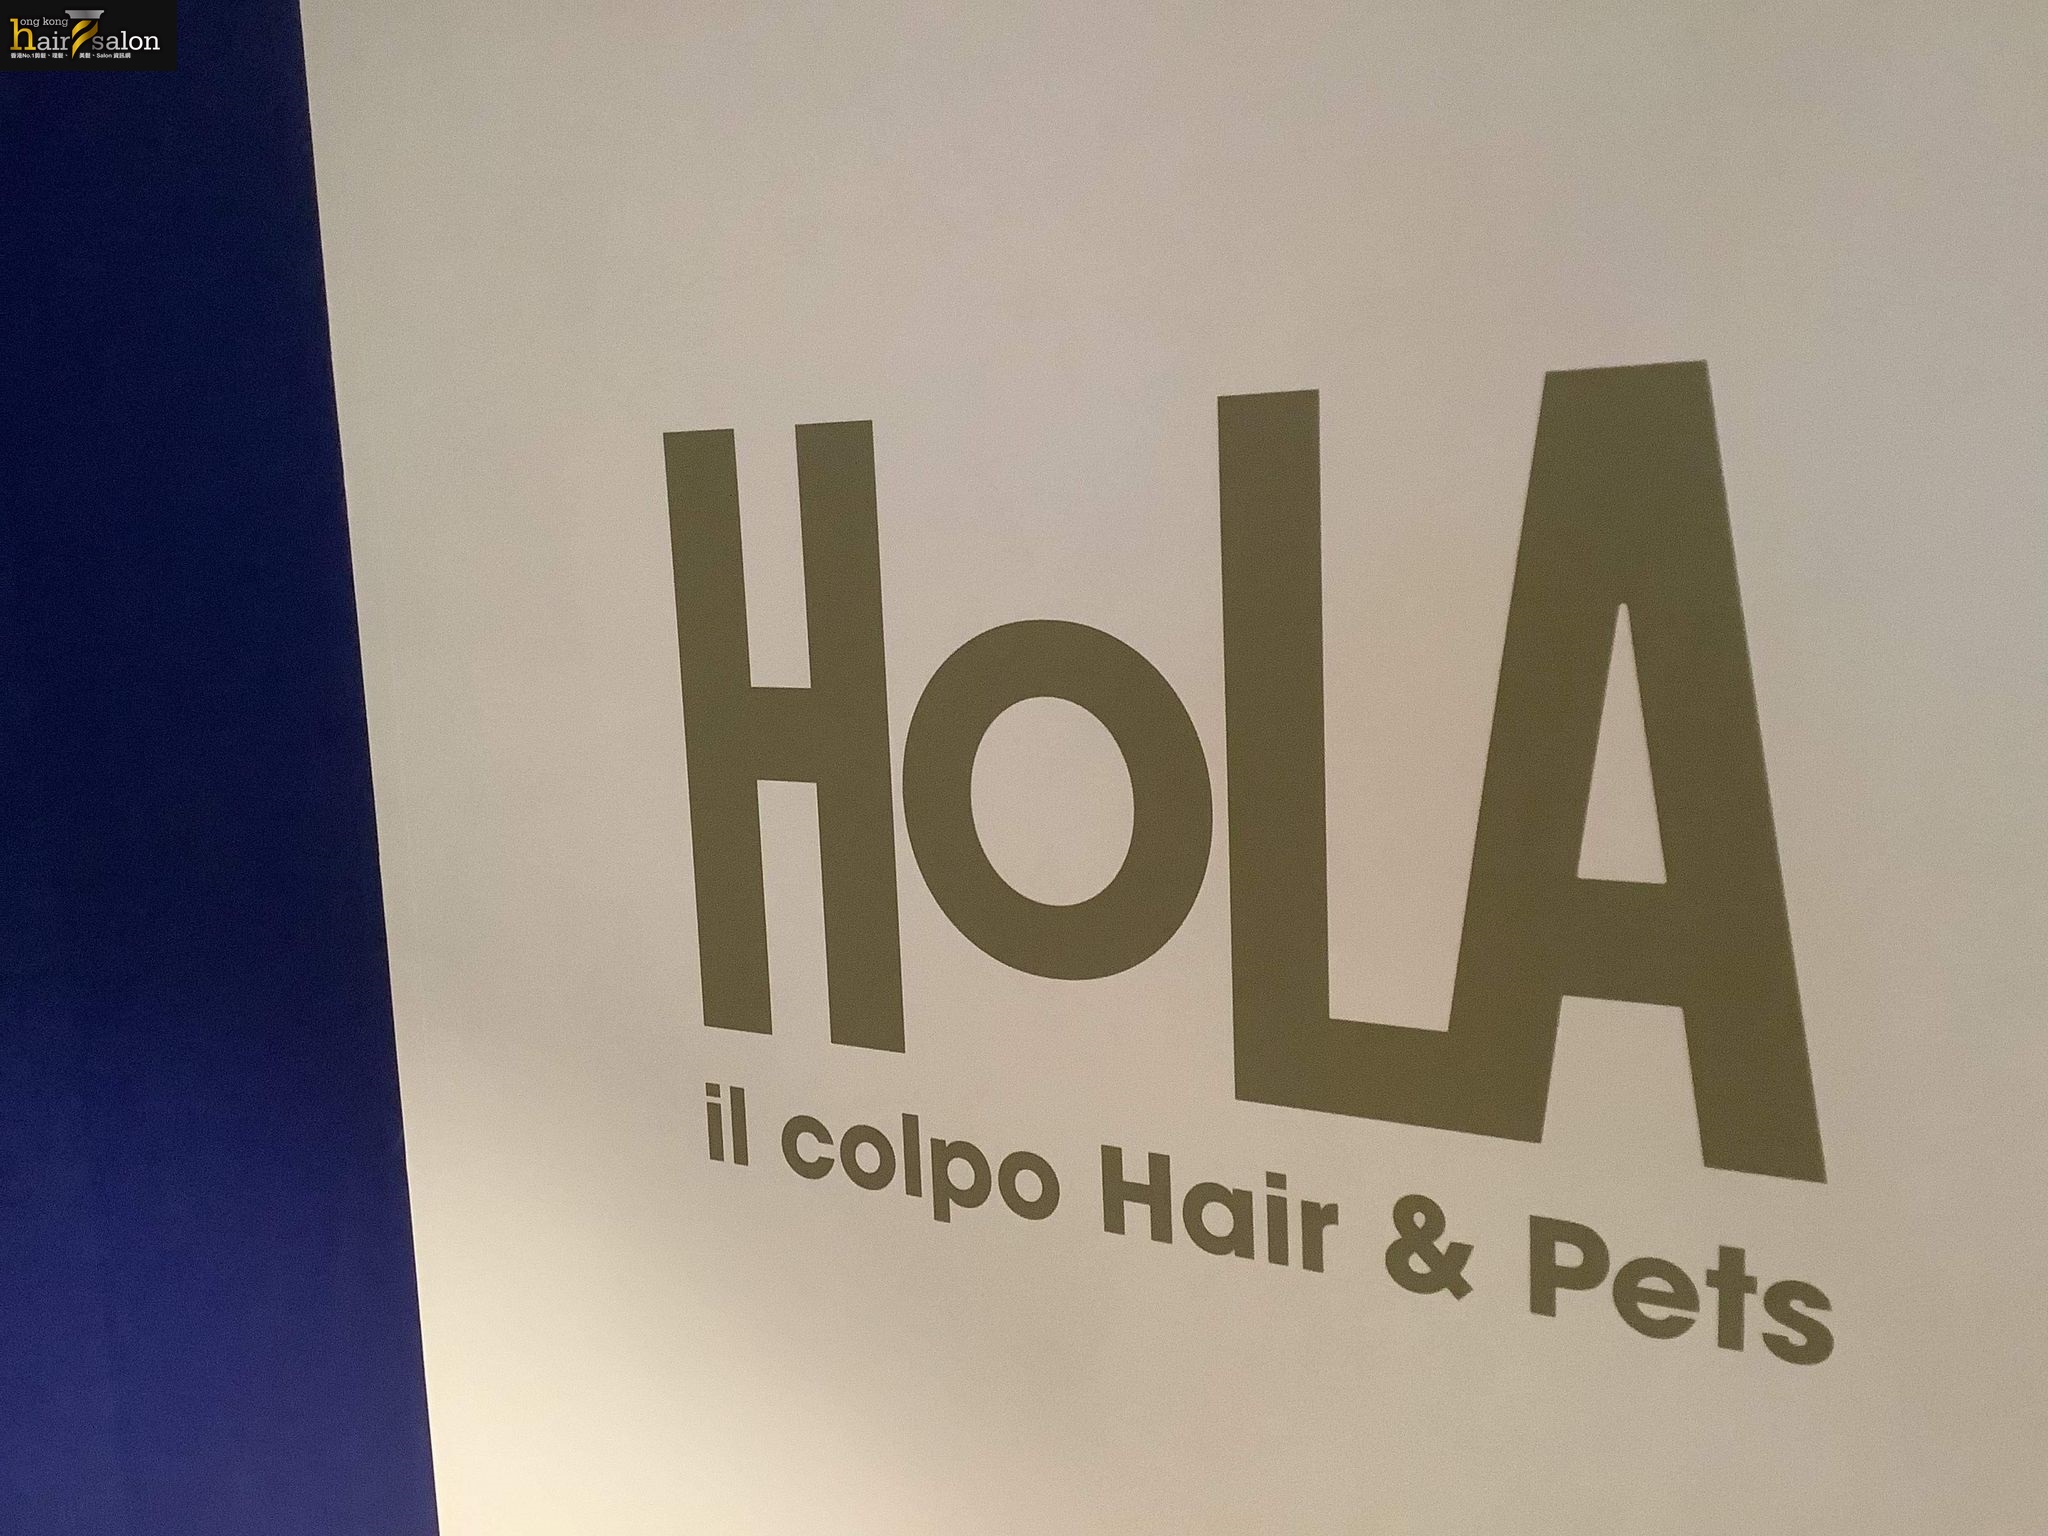 Haircut: Hola il Colpo hairs & pets